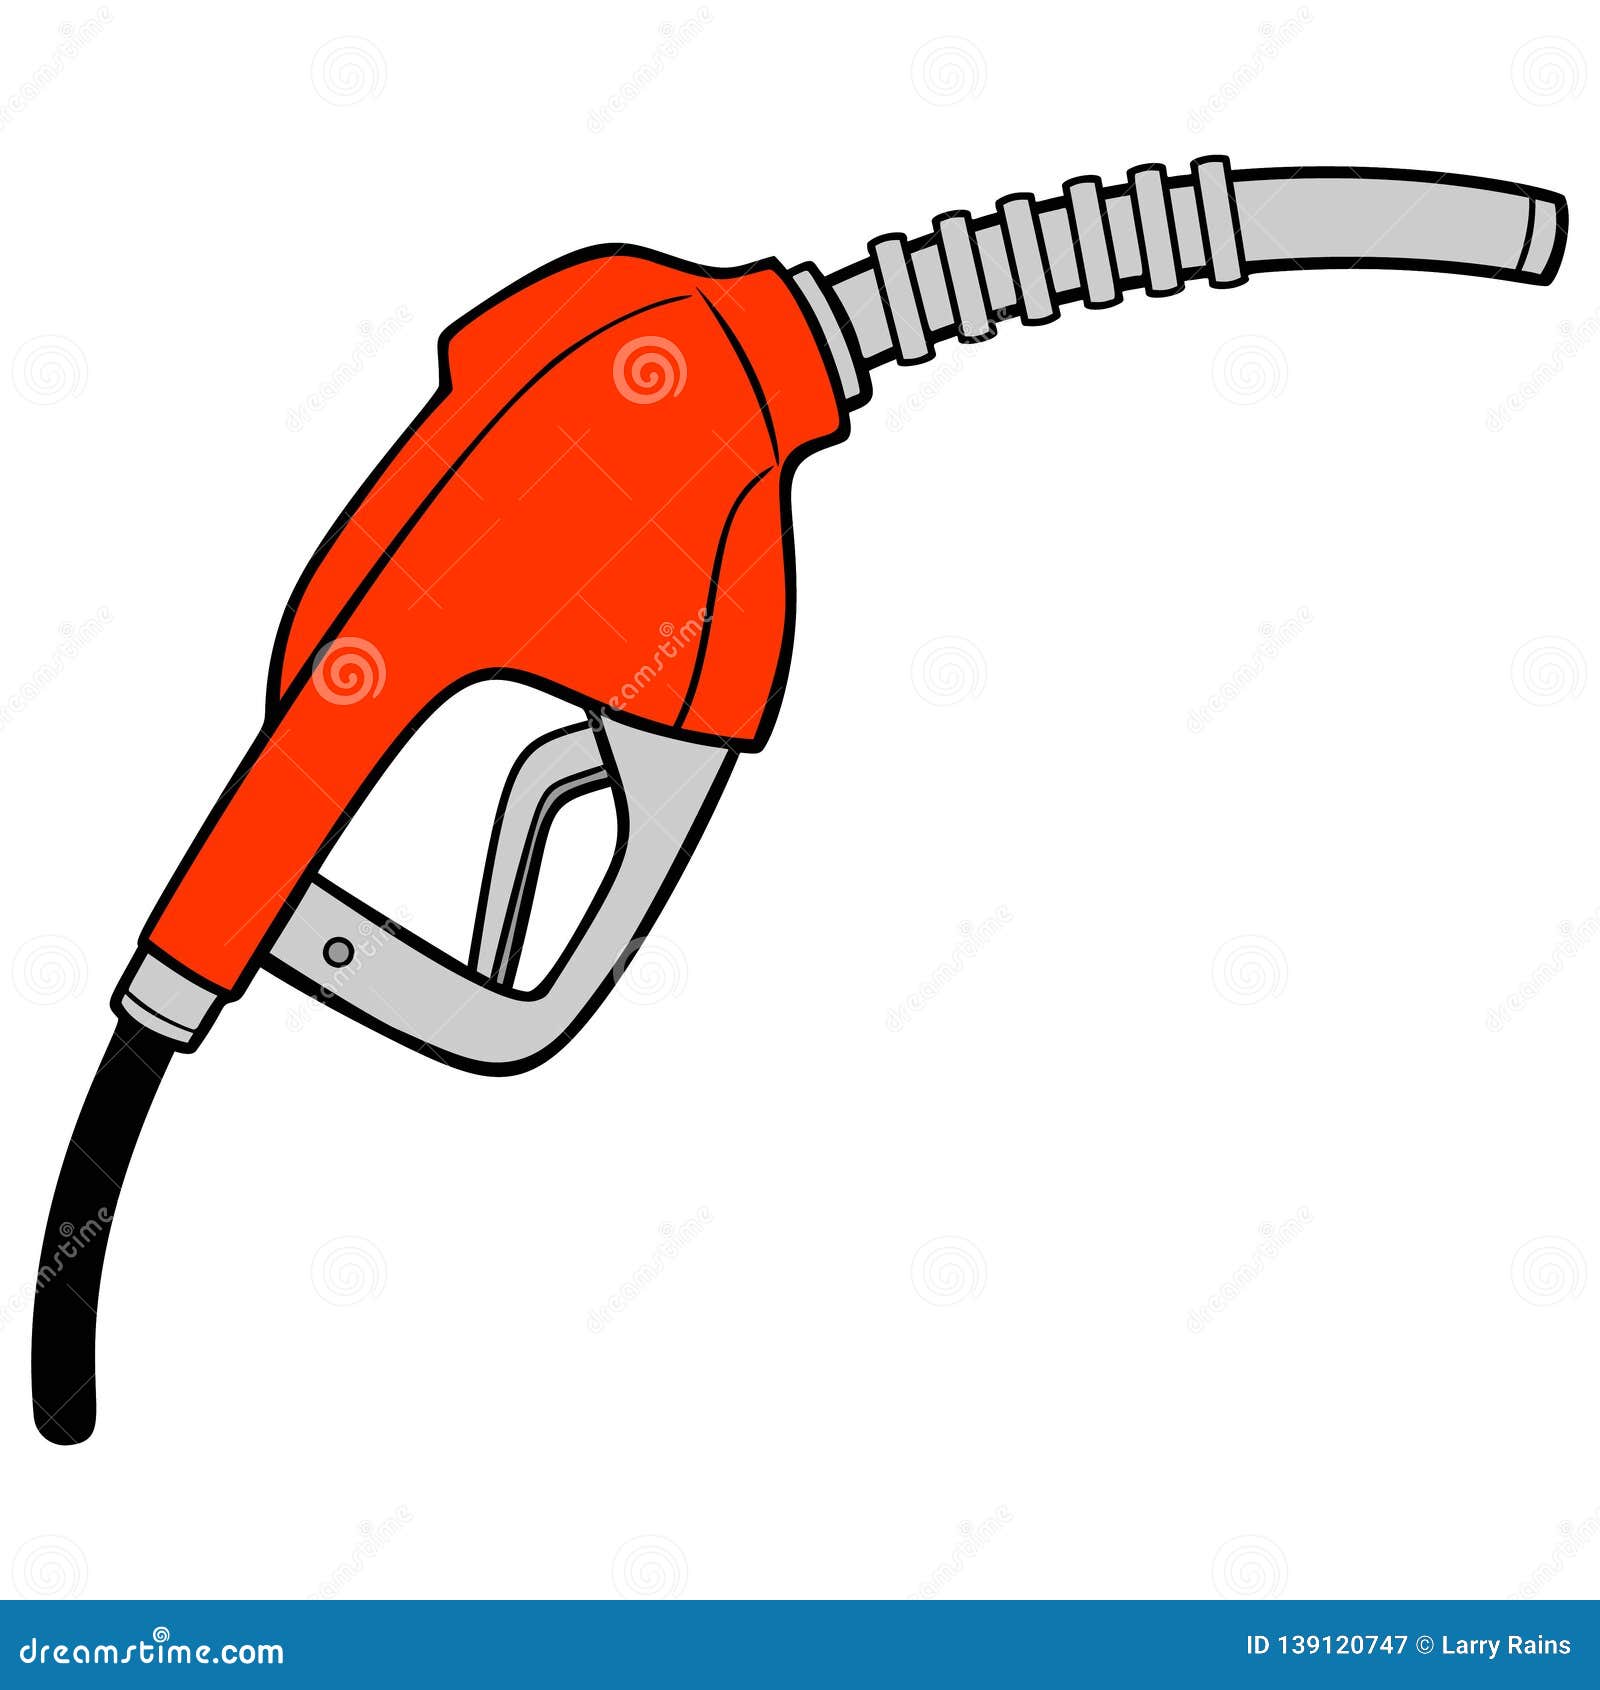 Gasoline Nozzle stock vector. Illustration of pump, cartoon - 139120747